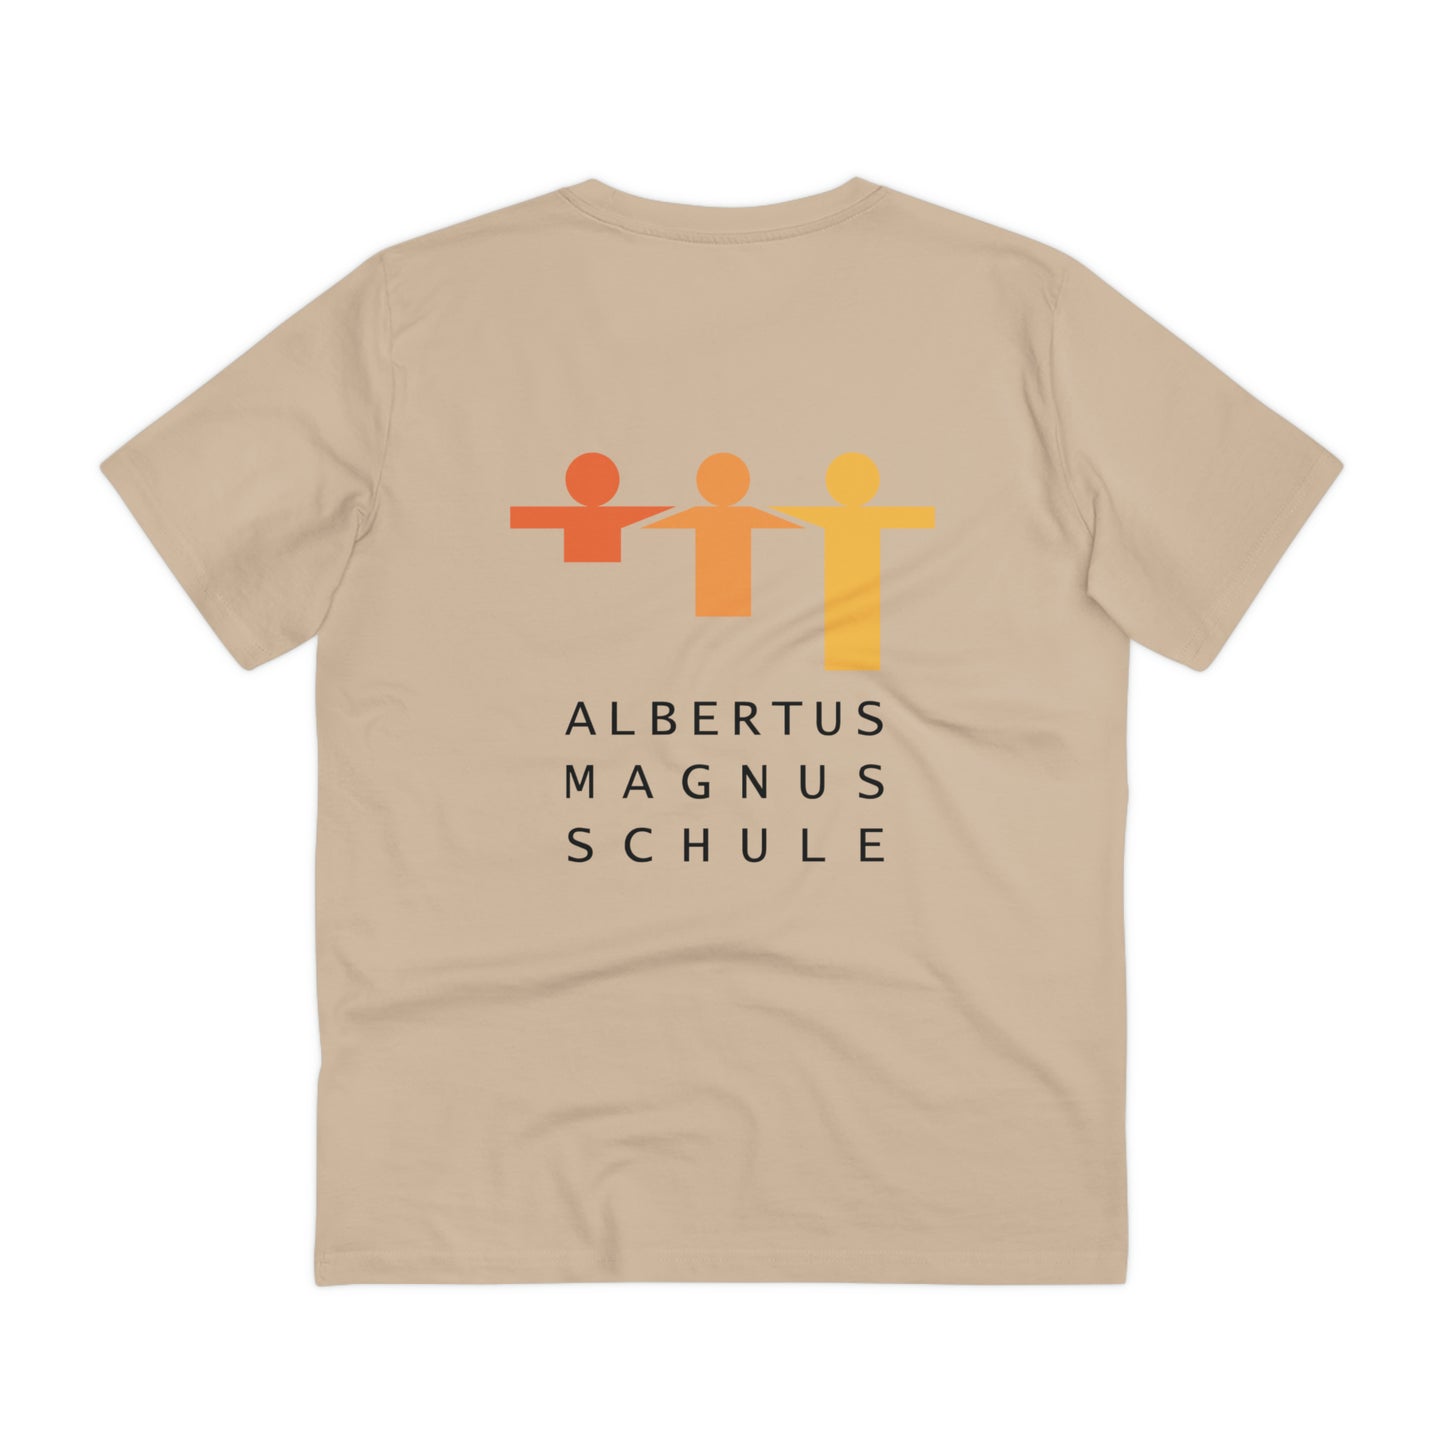 Albertus Magnus Schule Organic Eco-Friendly T-shirt